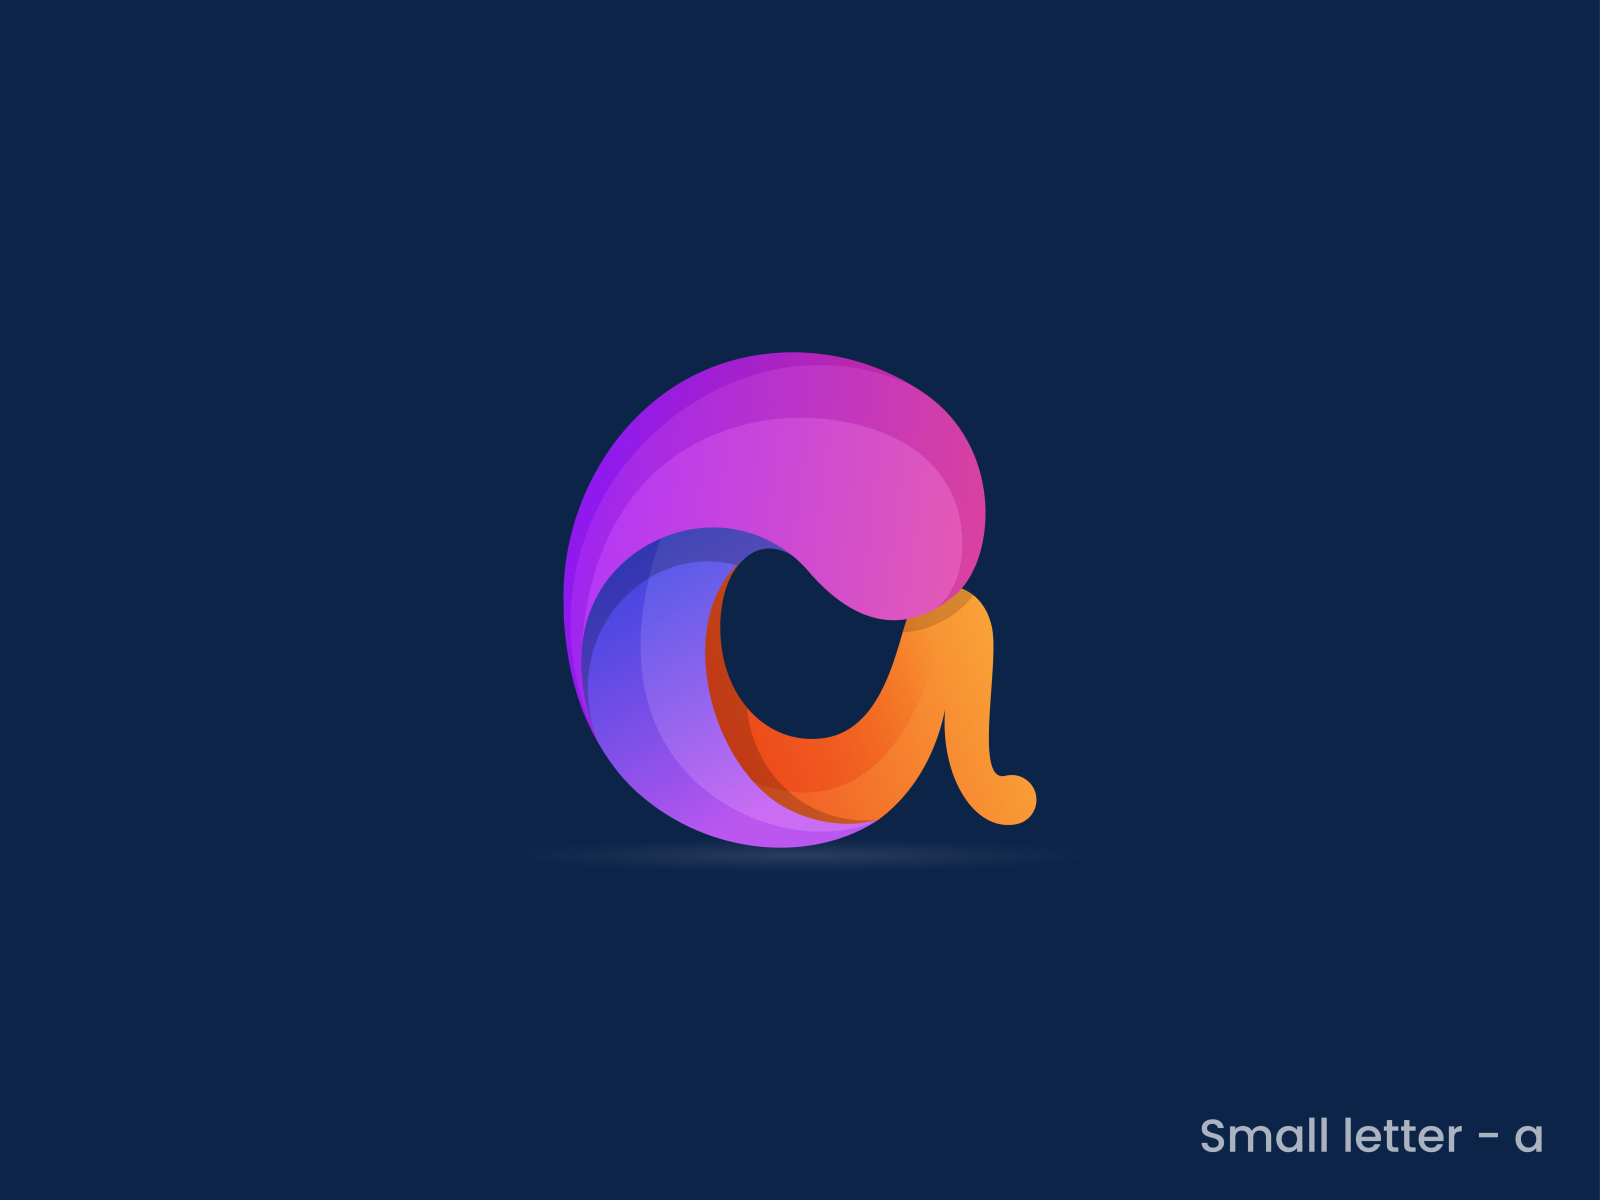 a Letter modern logo by Shakib Rahman on Dribbble